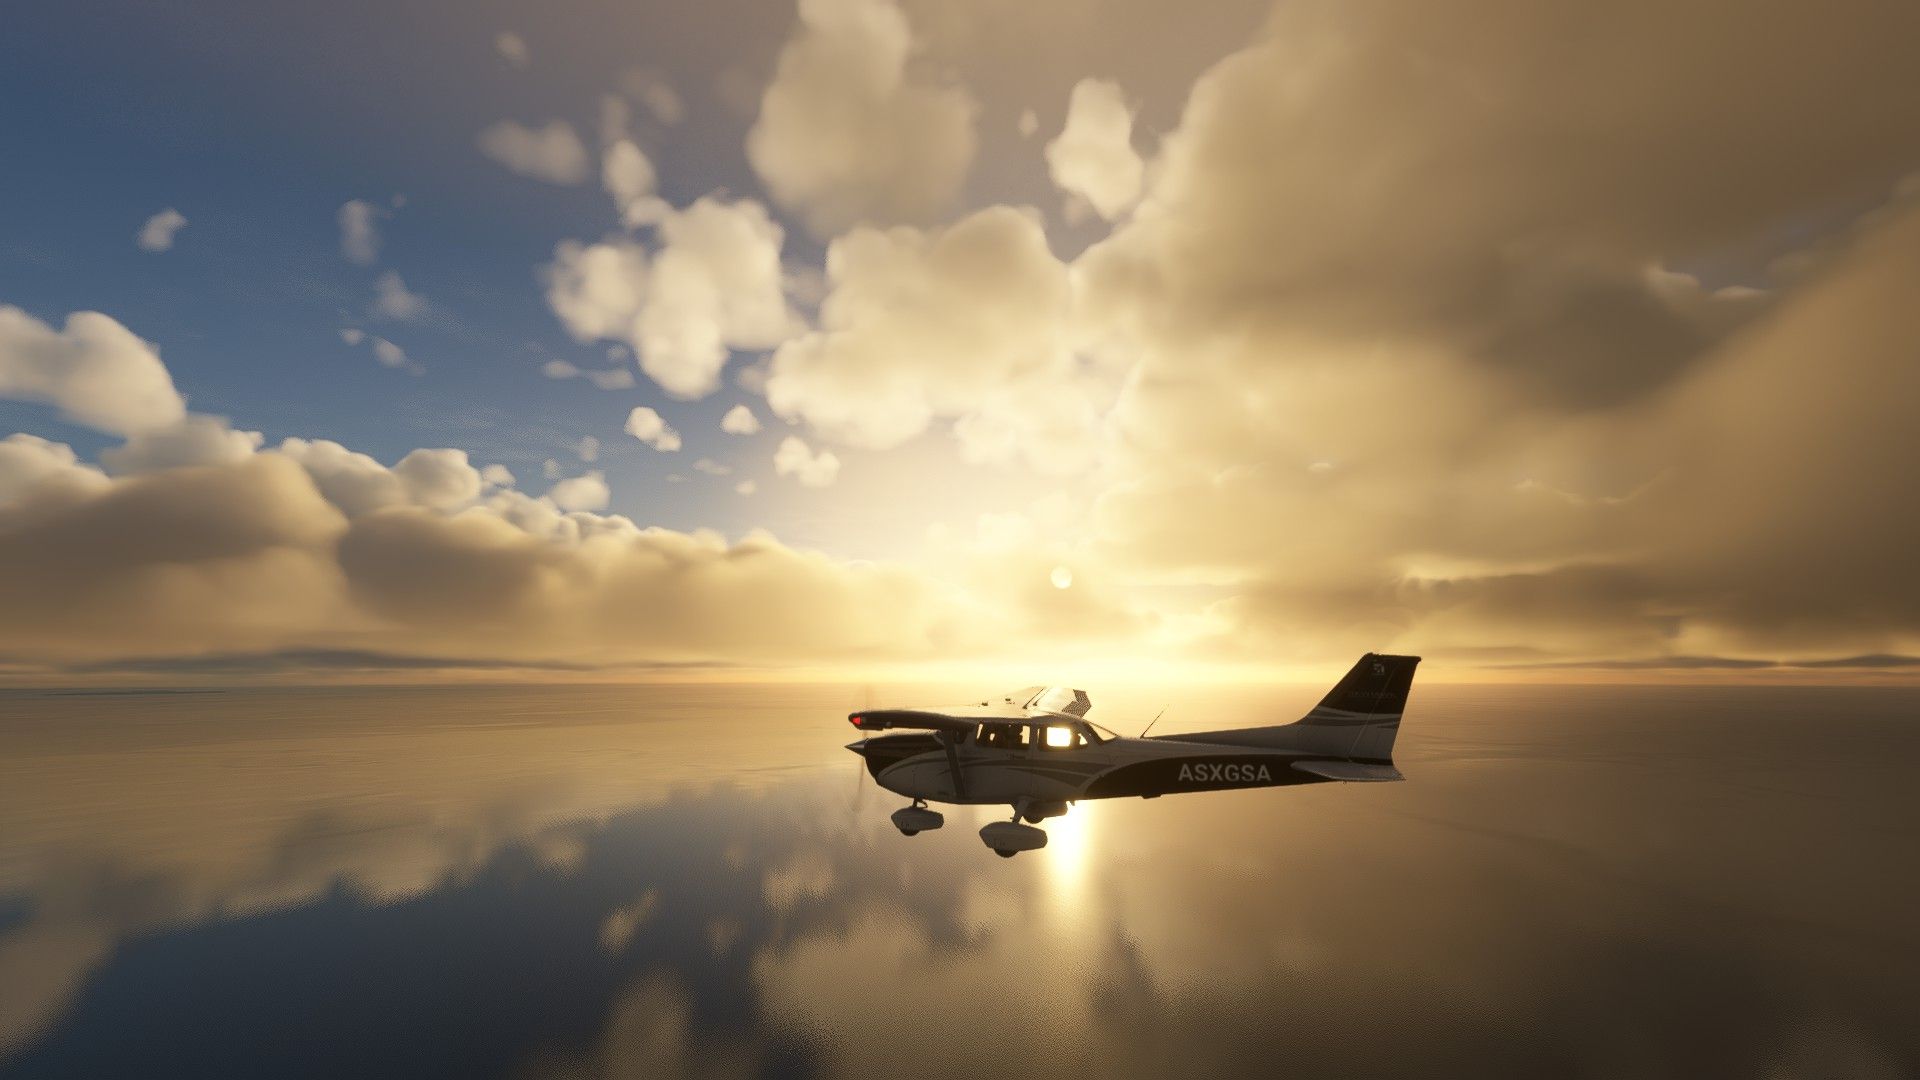 Learning to fly on Microsoft Flight Simulator